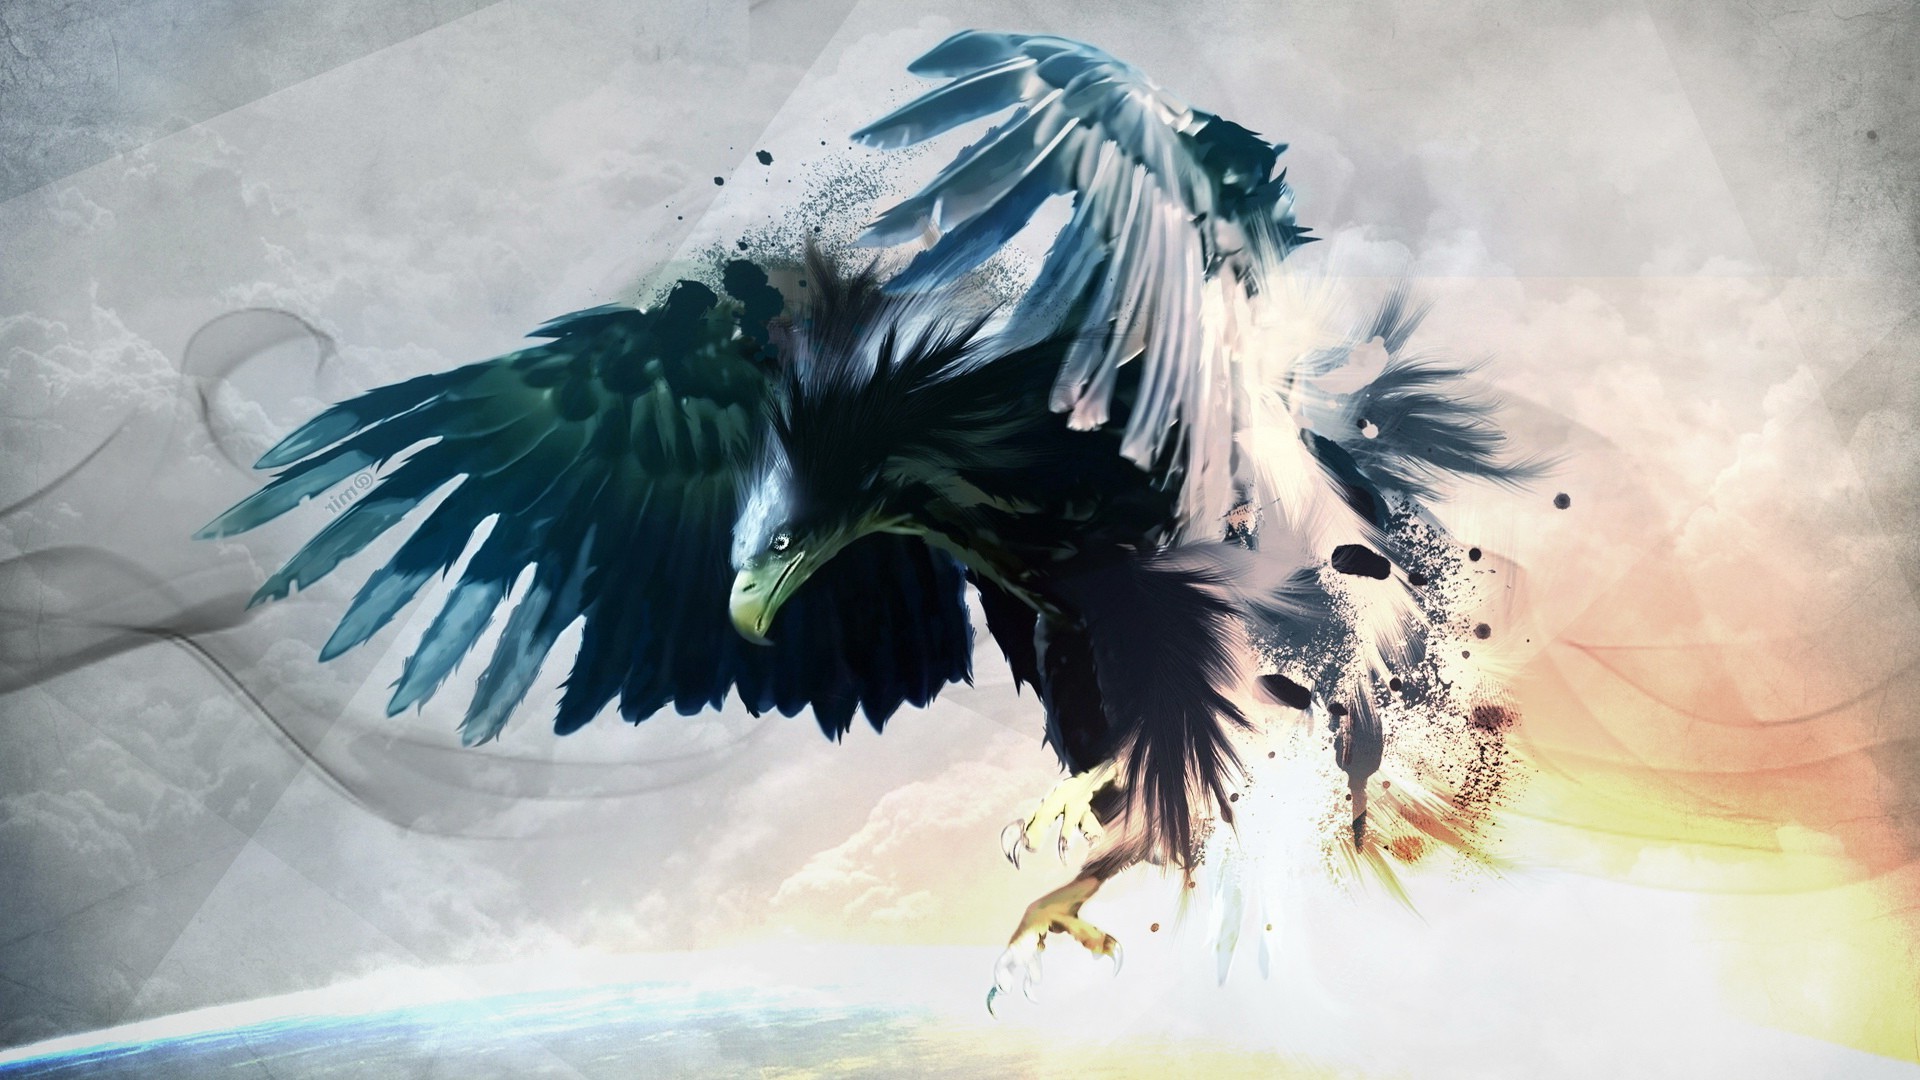 artwork wallpaper,wing,cg artwork,raven,eagle,illustration